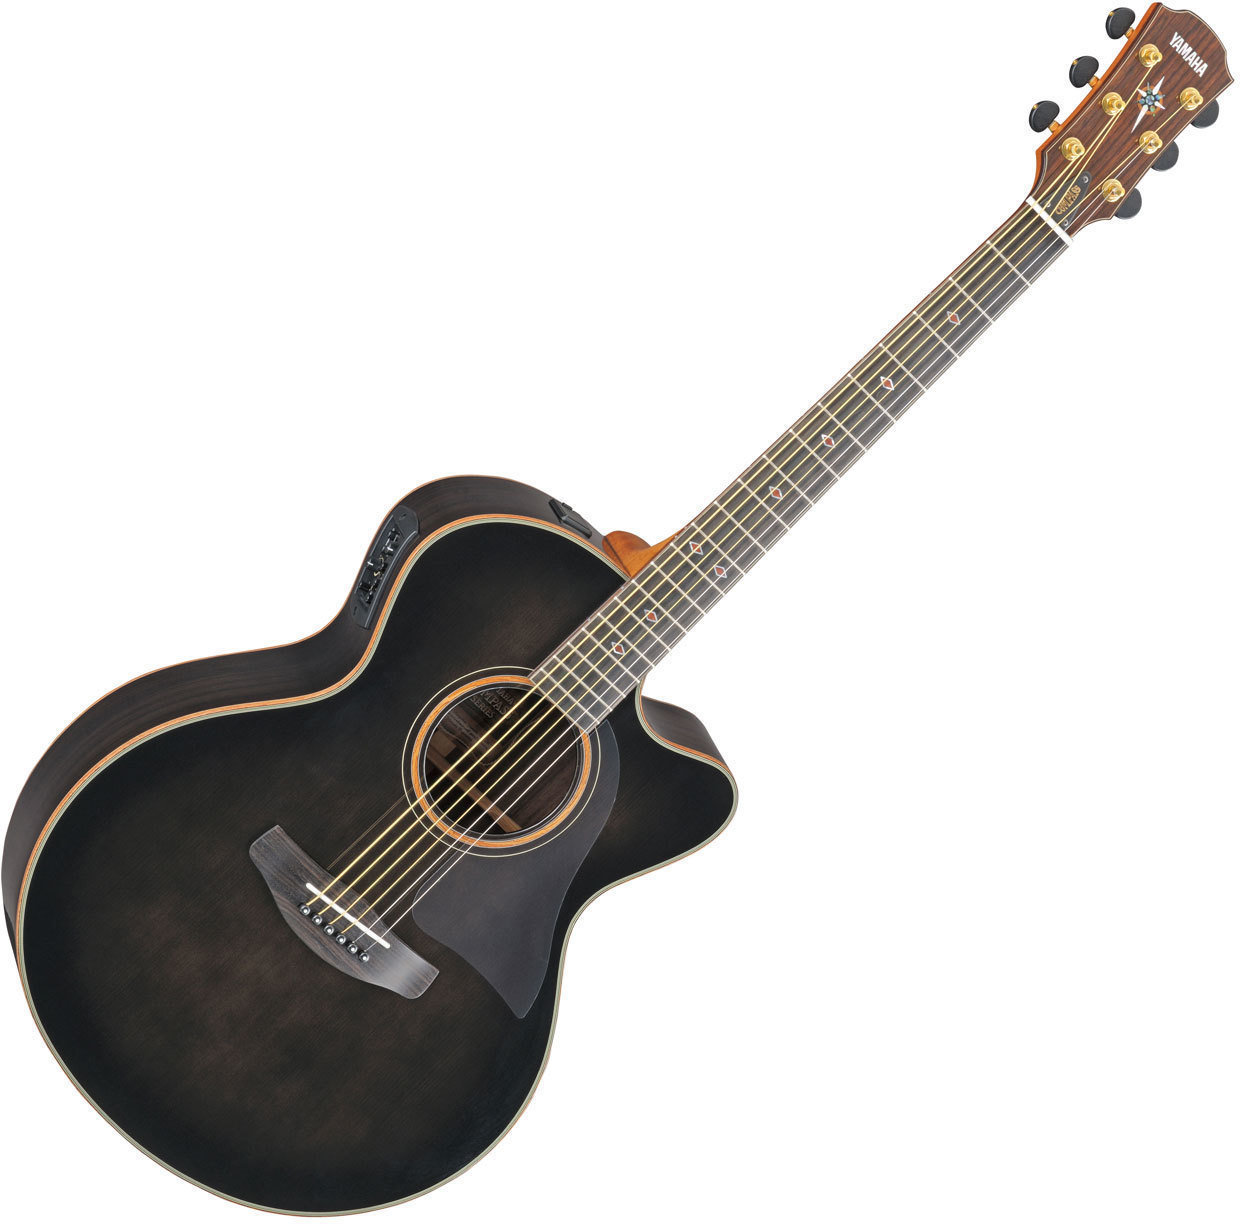 Jumbo elektro-akoestische gitaar Yamaha CPX1200II TBL Translucent Black